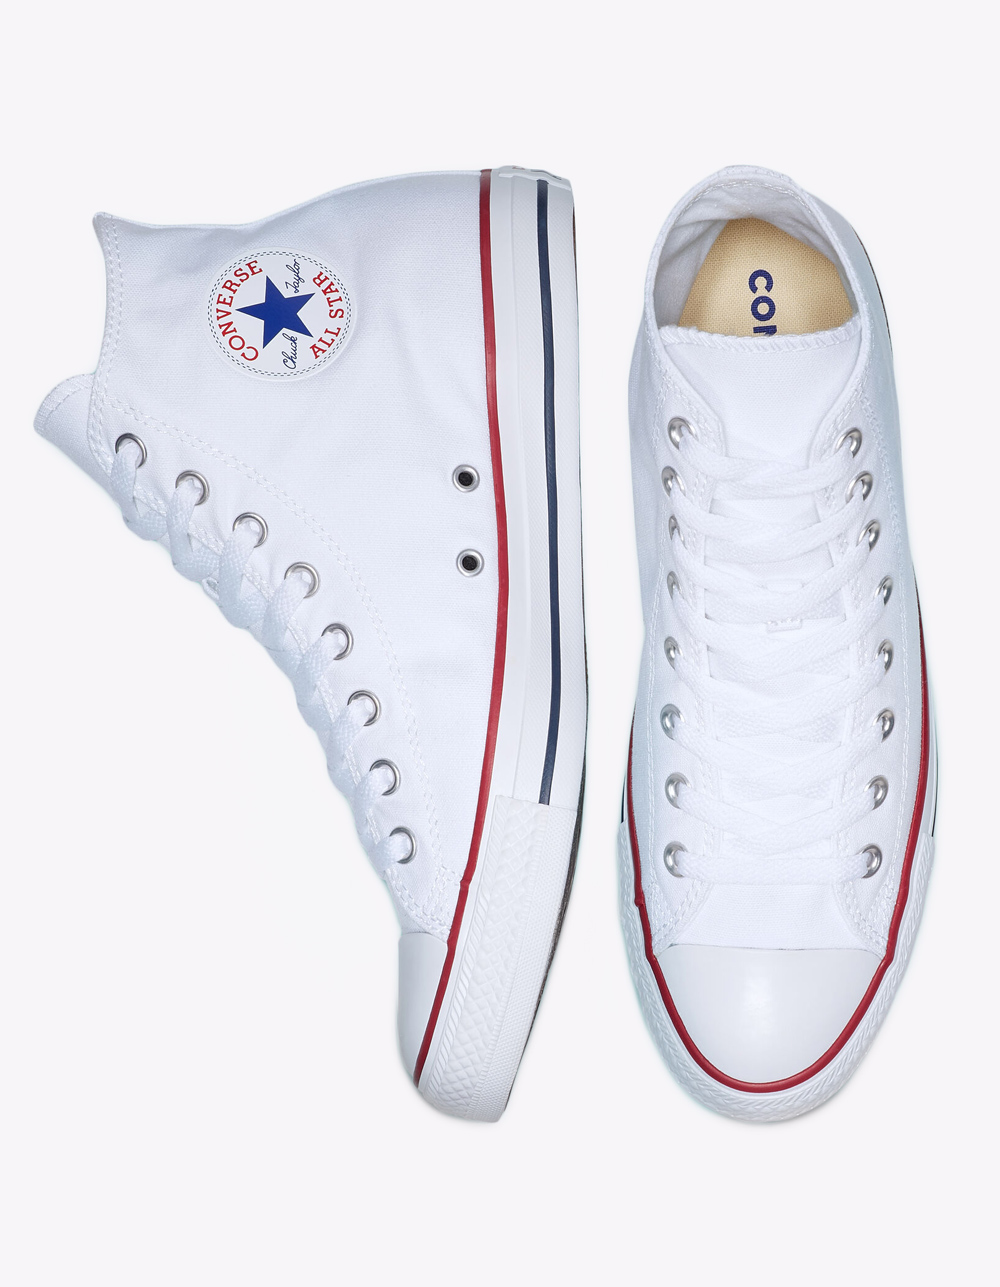 Converse Chuck Taylor All Star High Top White Shoes | PacSun-saigonsouth.com.vn